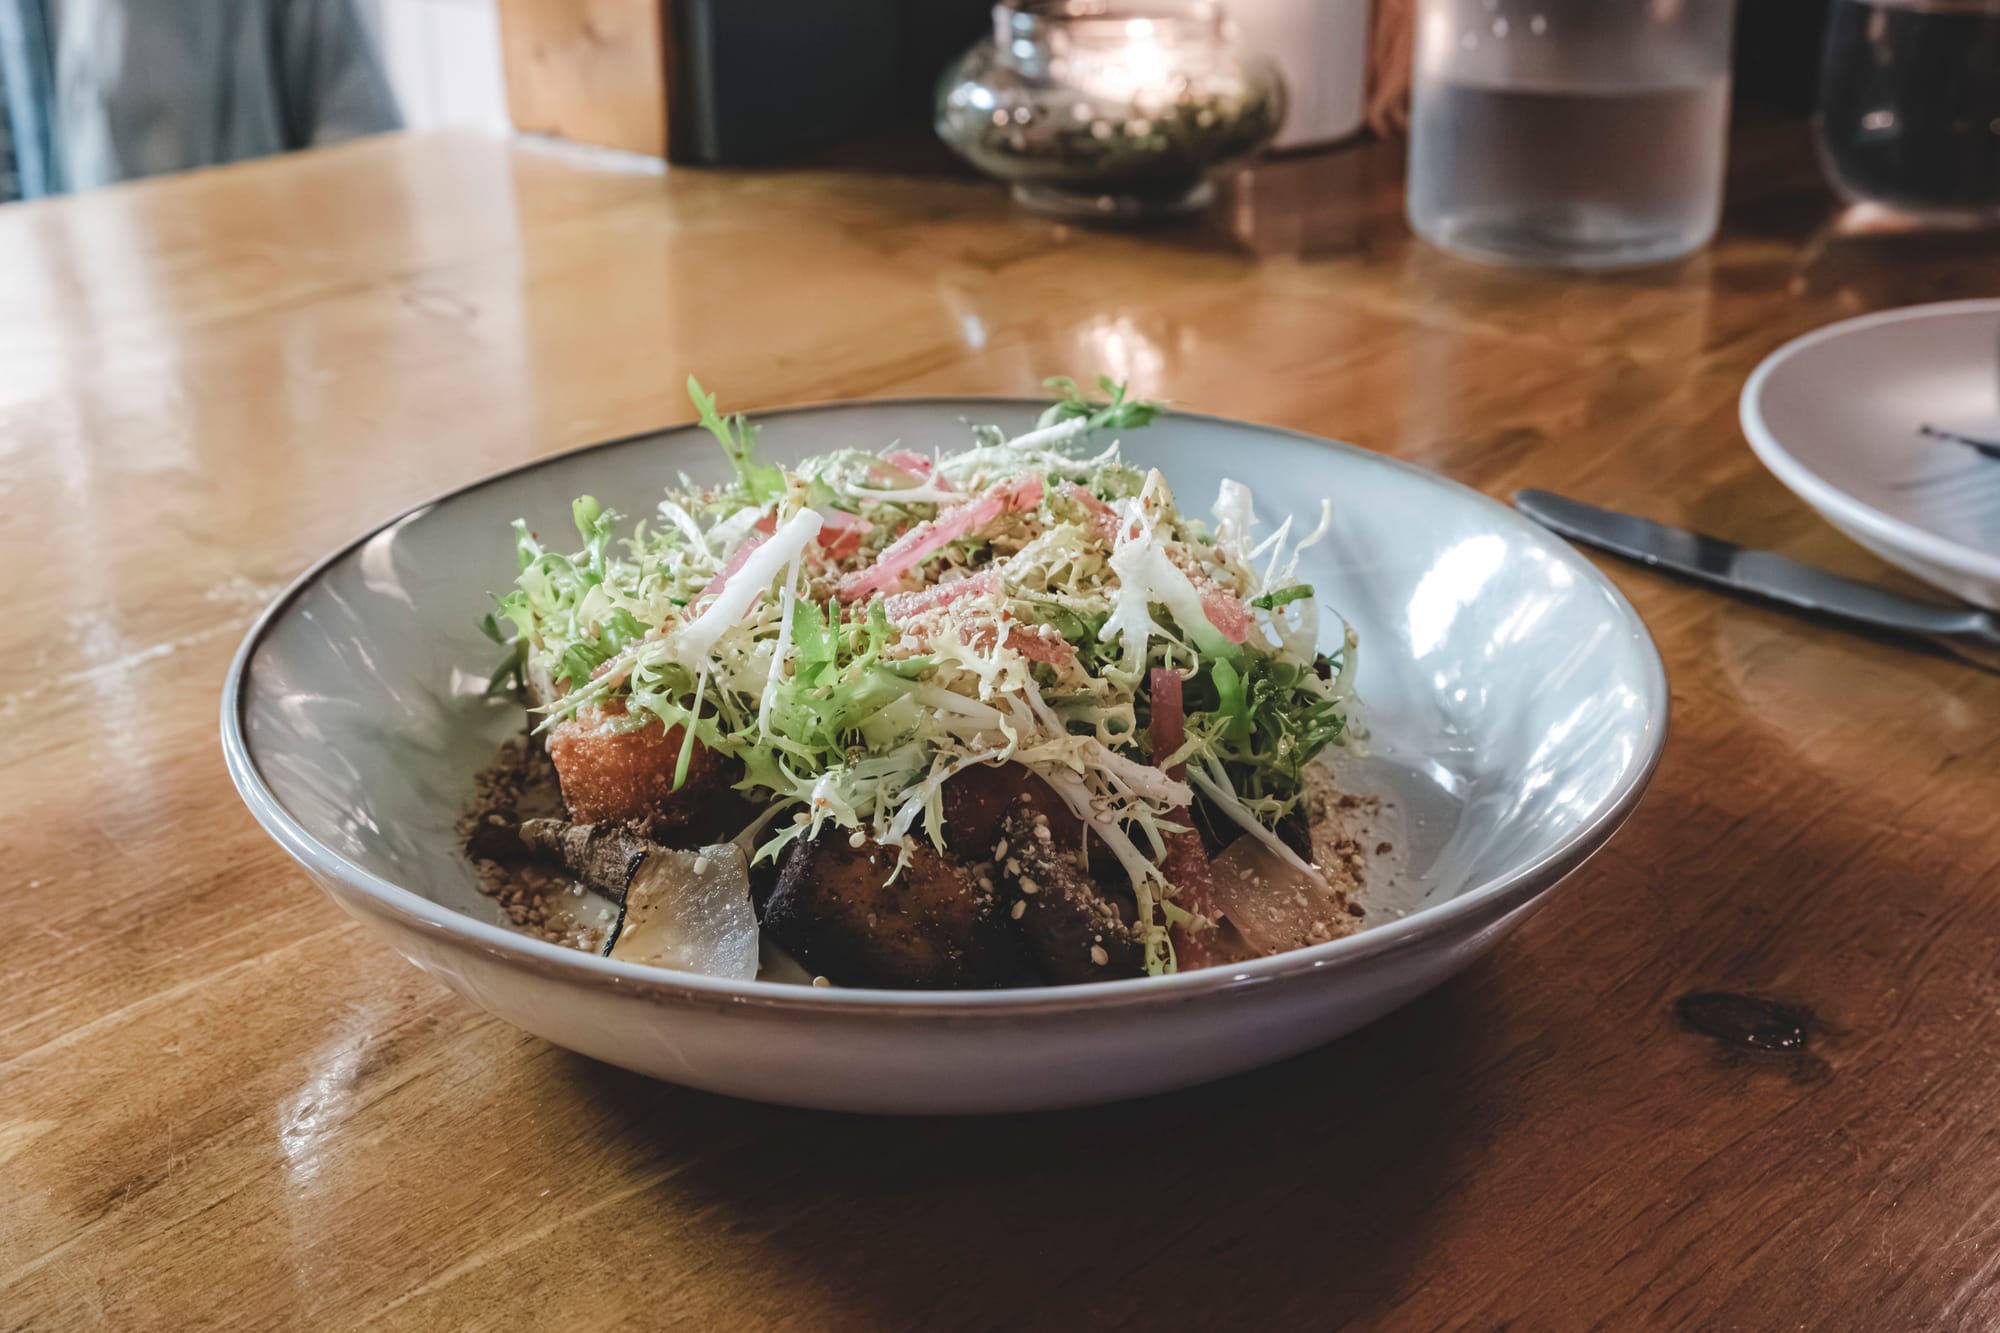 Folke [REVIEW] – The Best Value Vegan Tasting Menu Experience in Vancouver